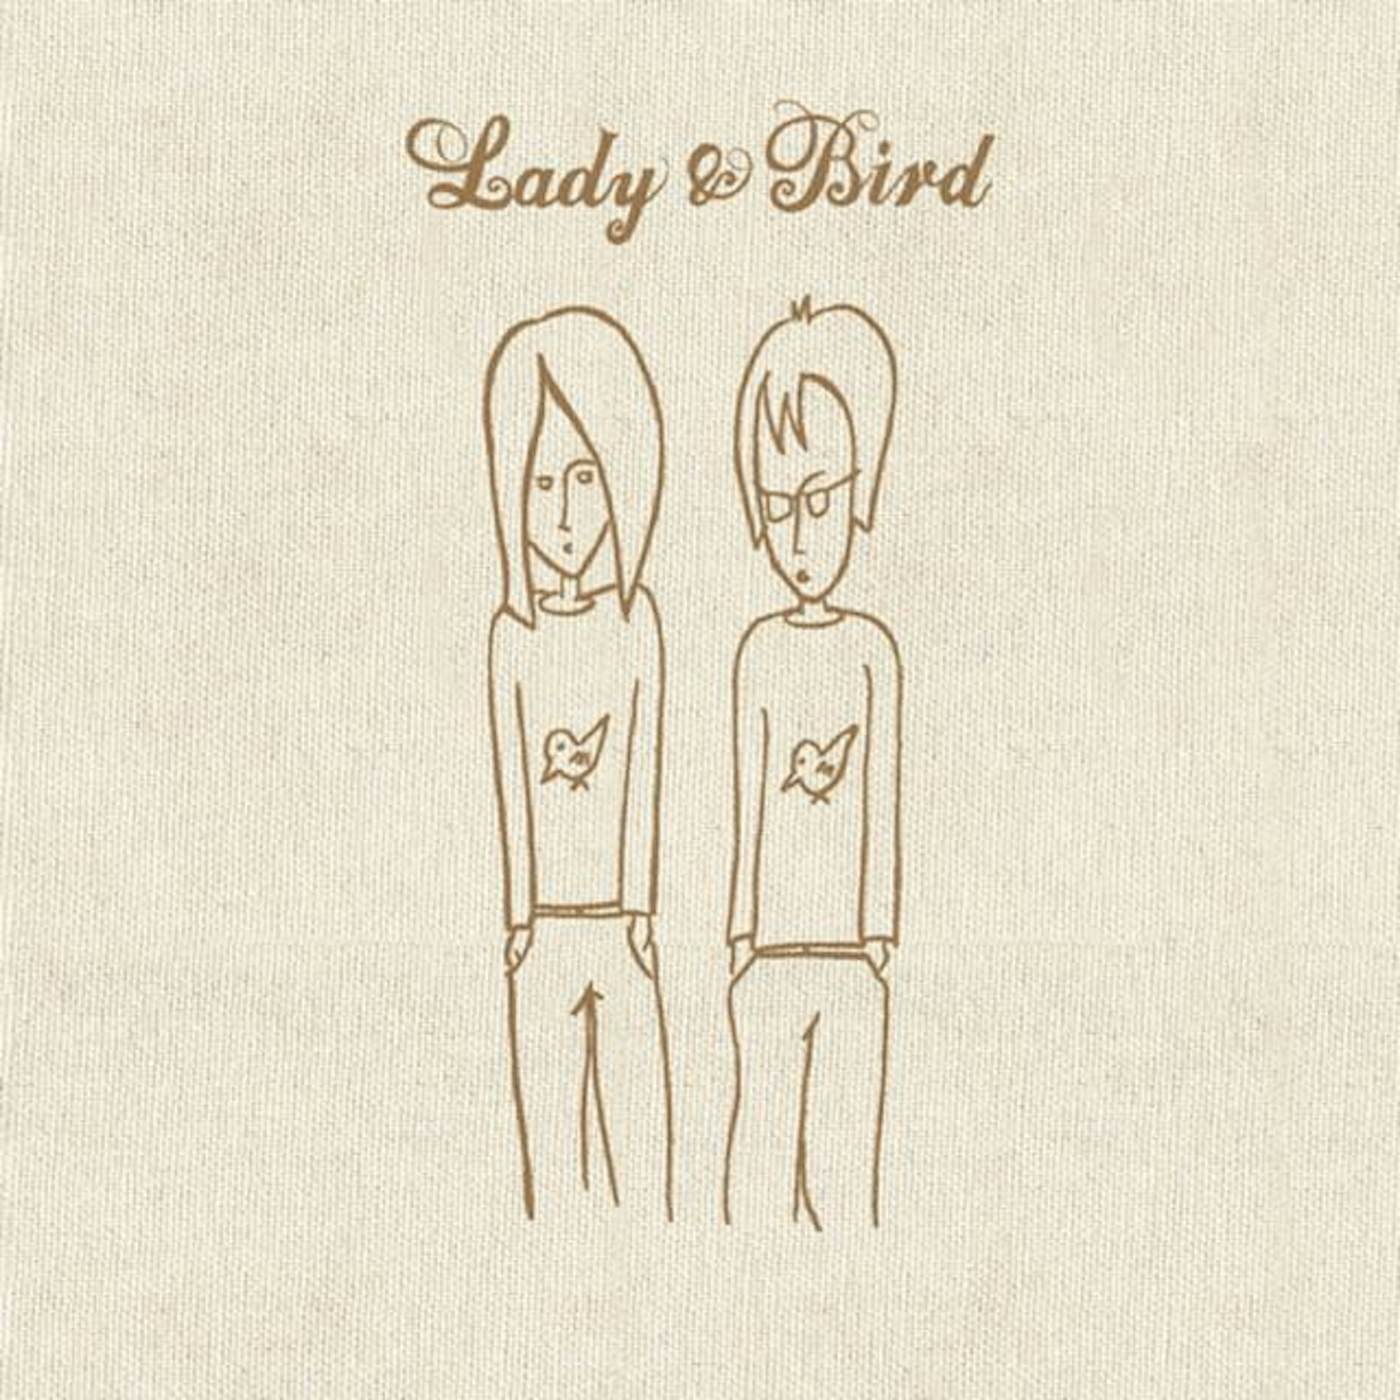 Lady & Bird